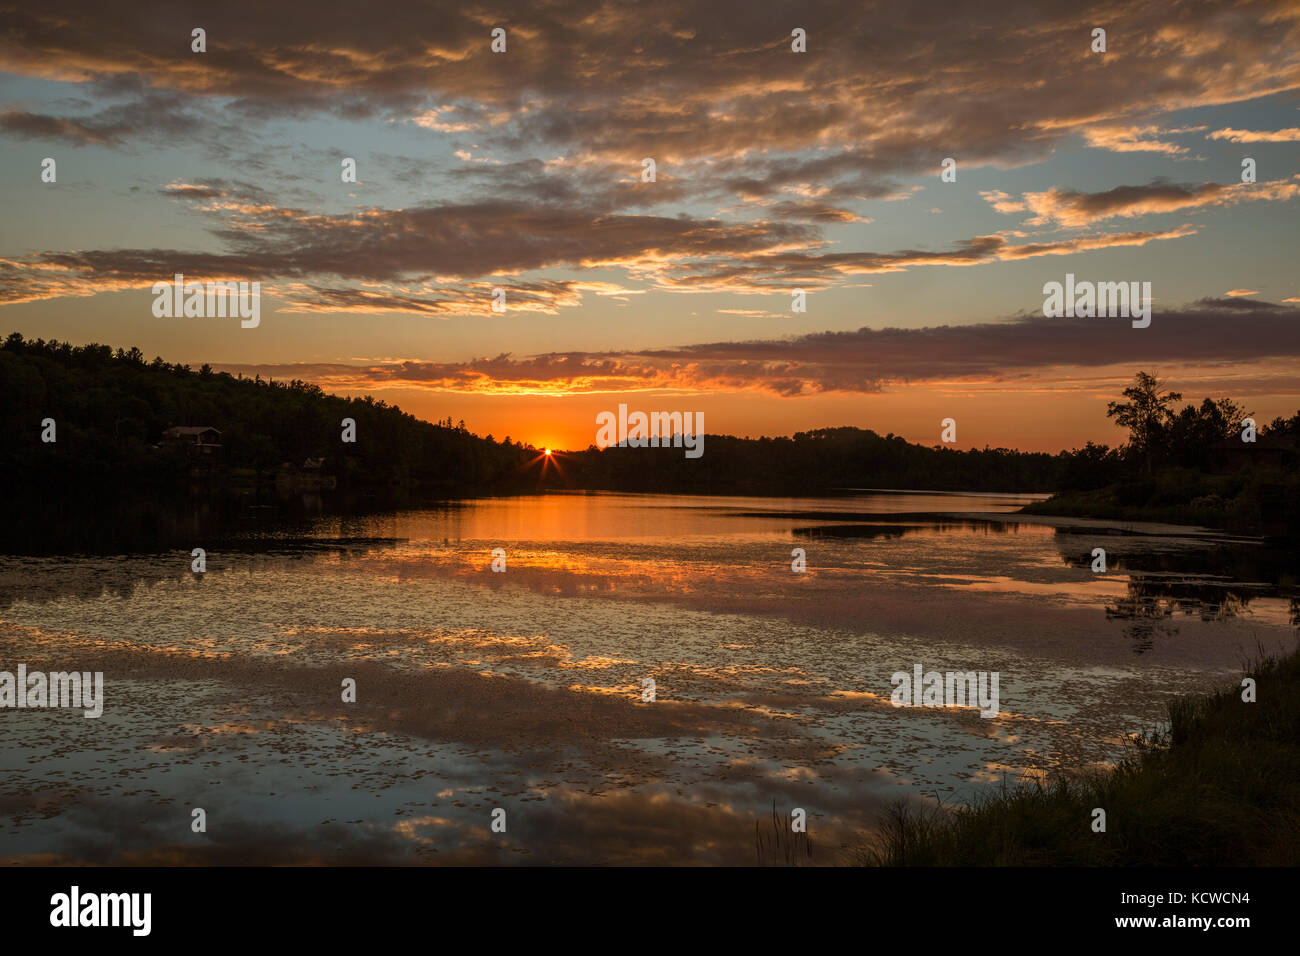 Sunset, St.Pothier Lake, Whitefish, City of Greater Sudbury, Ontario, Canada Stock Photo